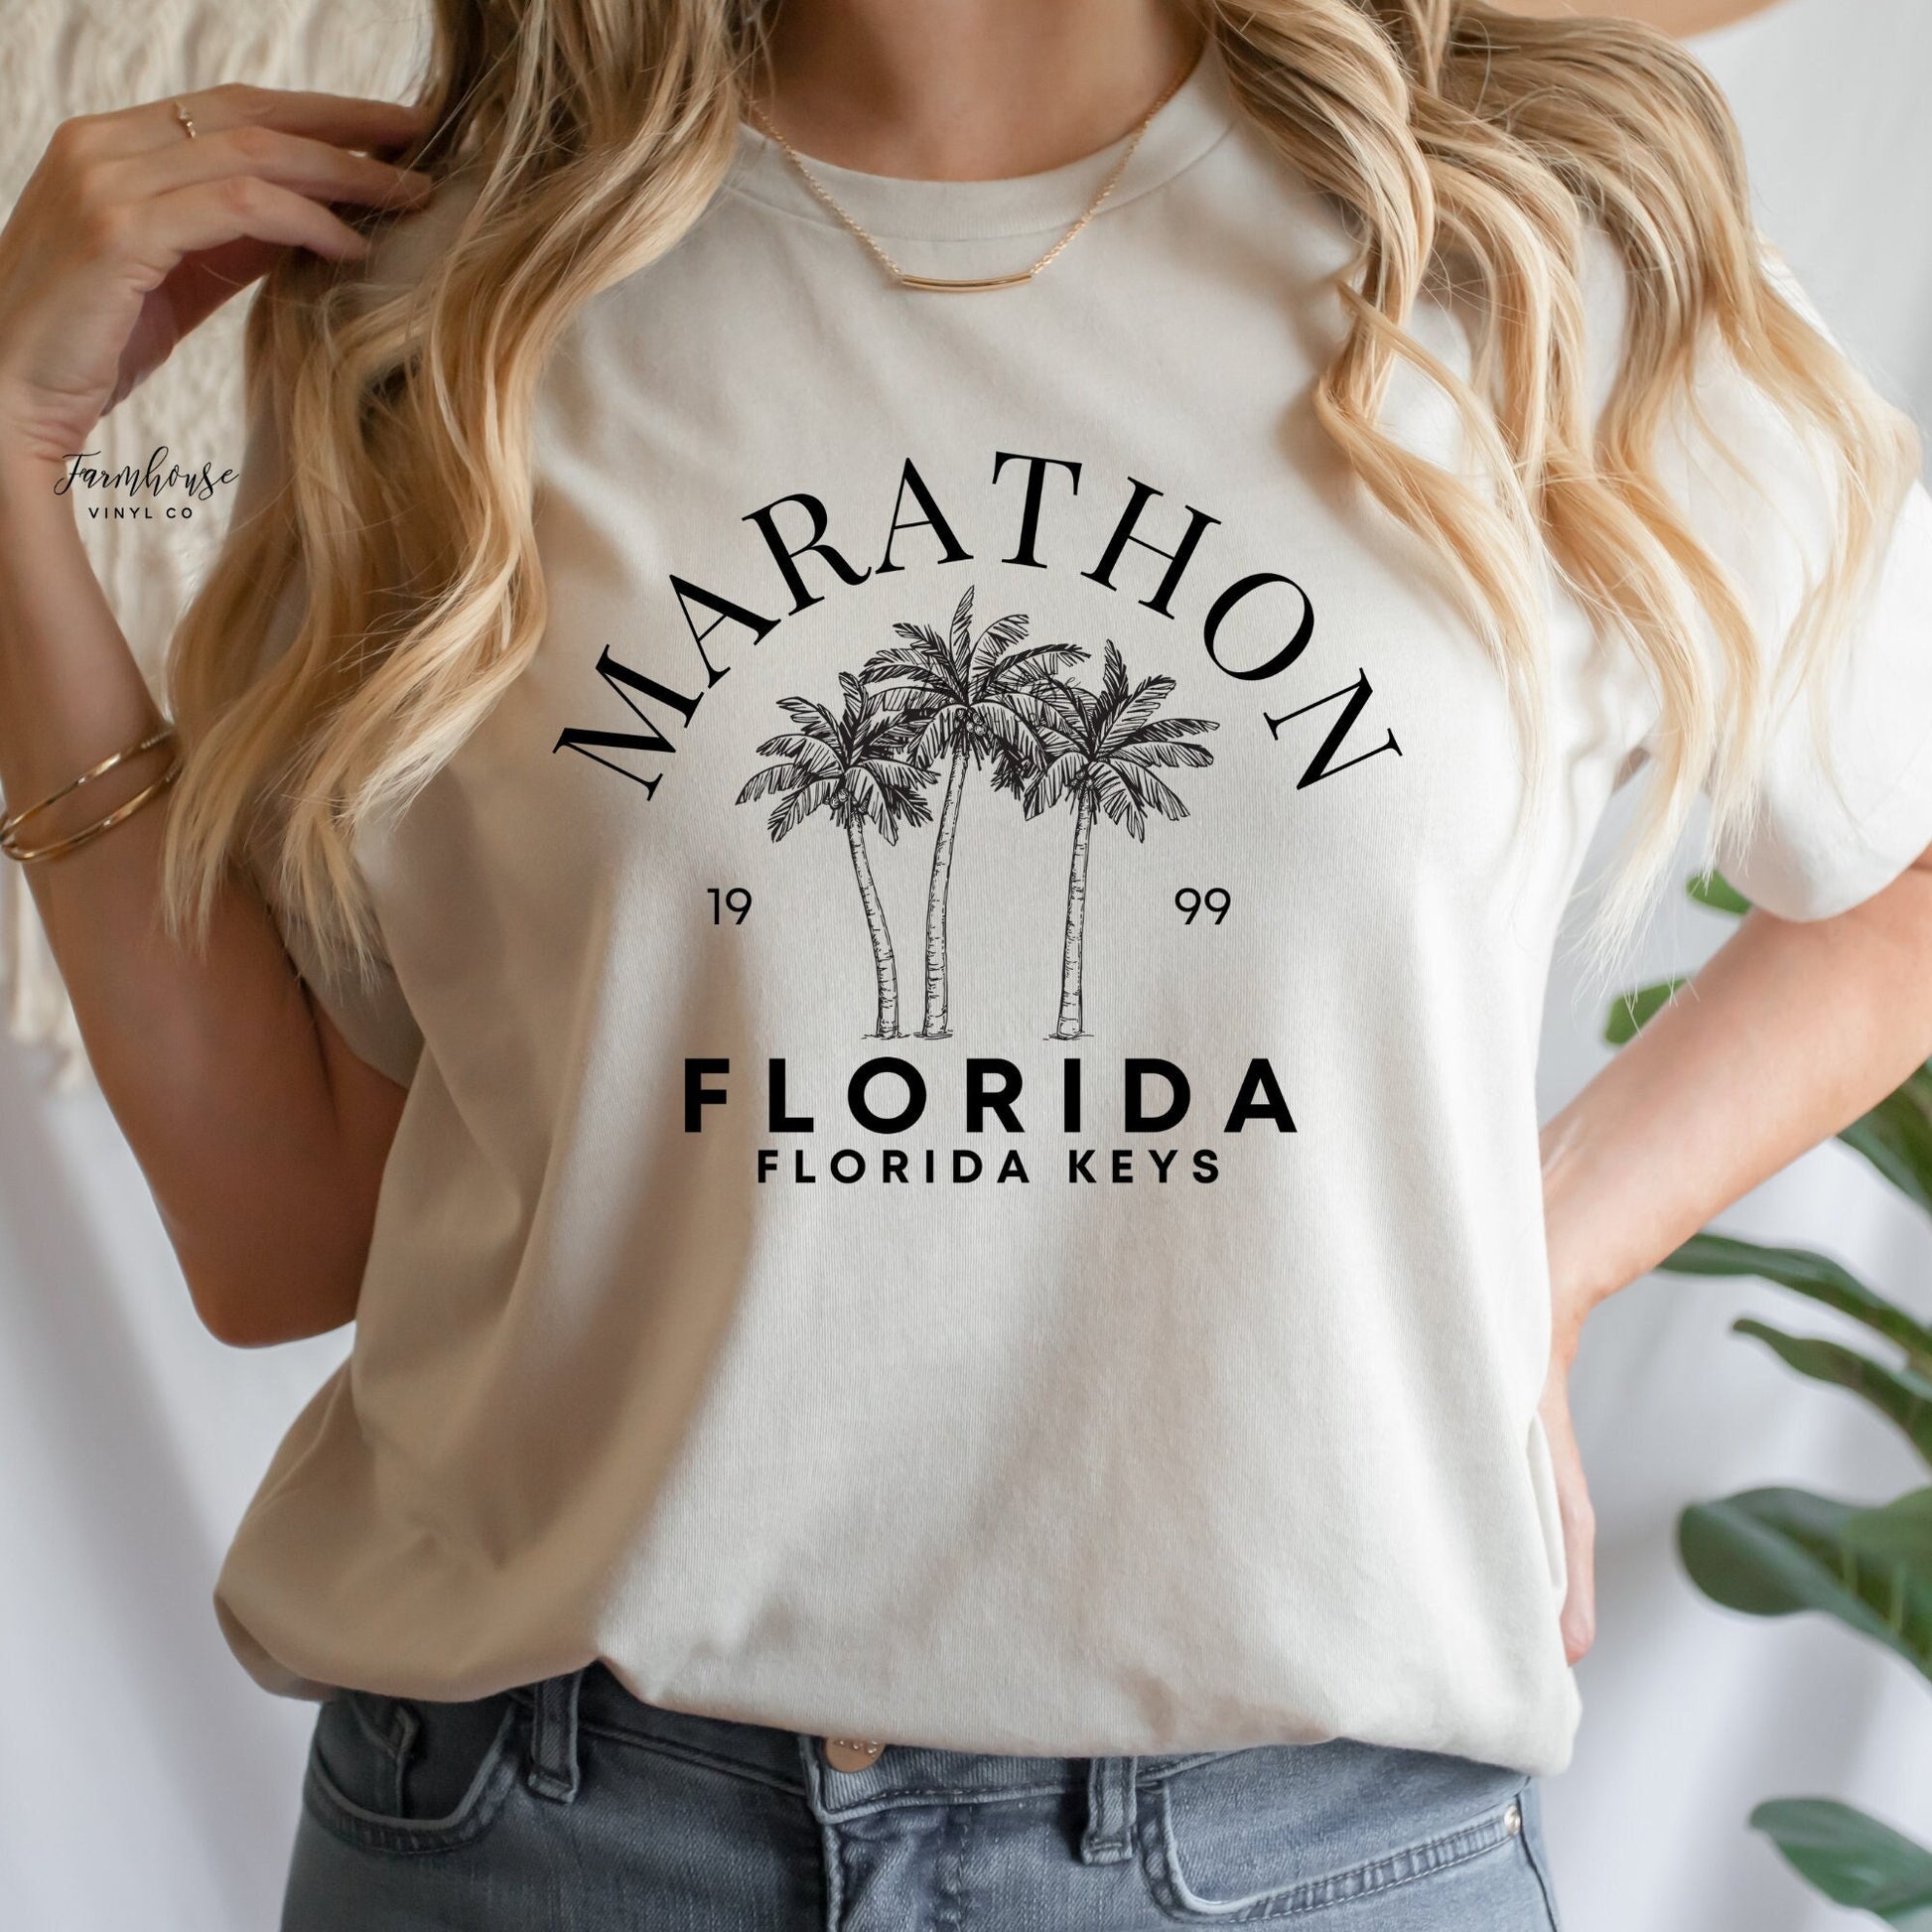 Marathon Florida Shirt - Farmhouse Vinyl Co